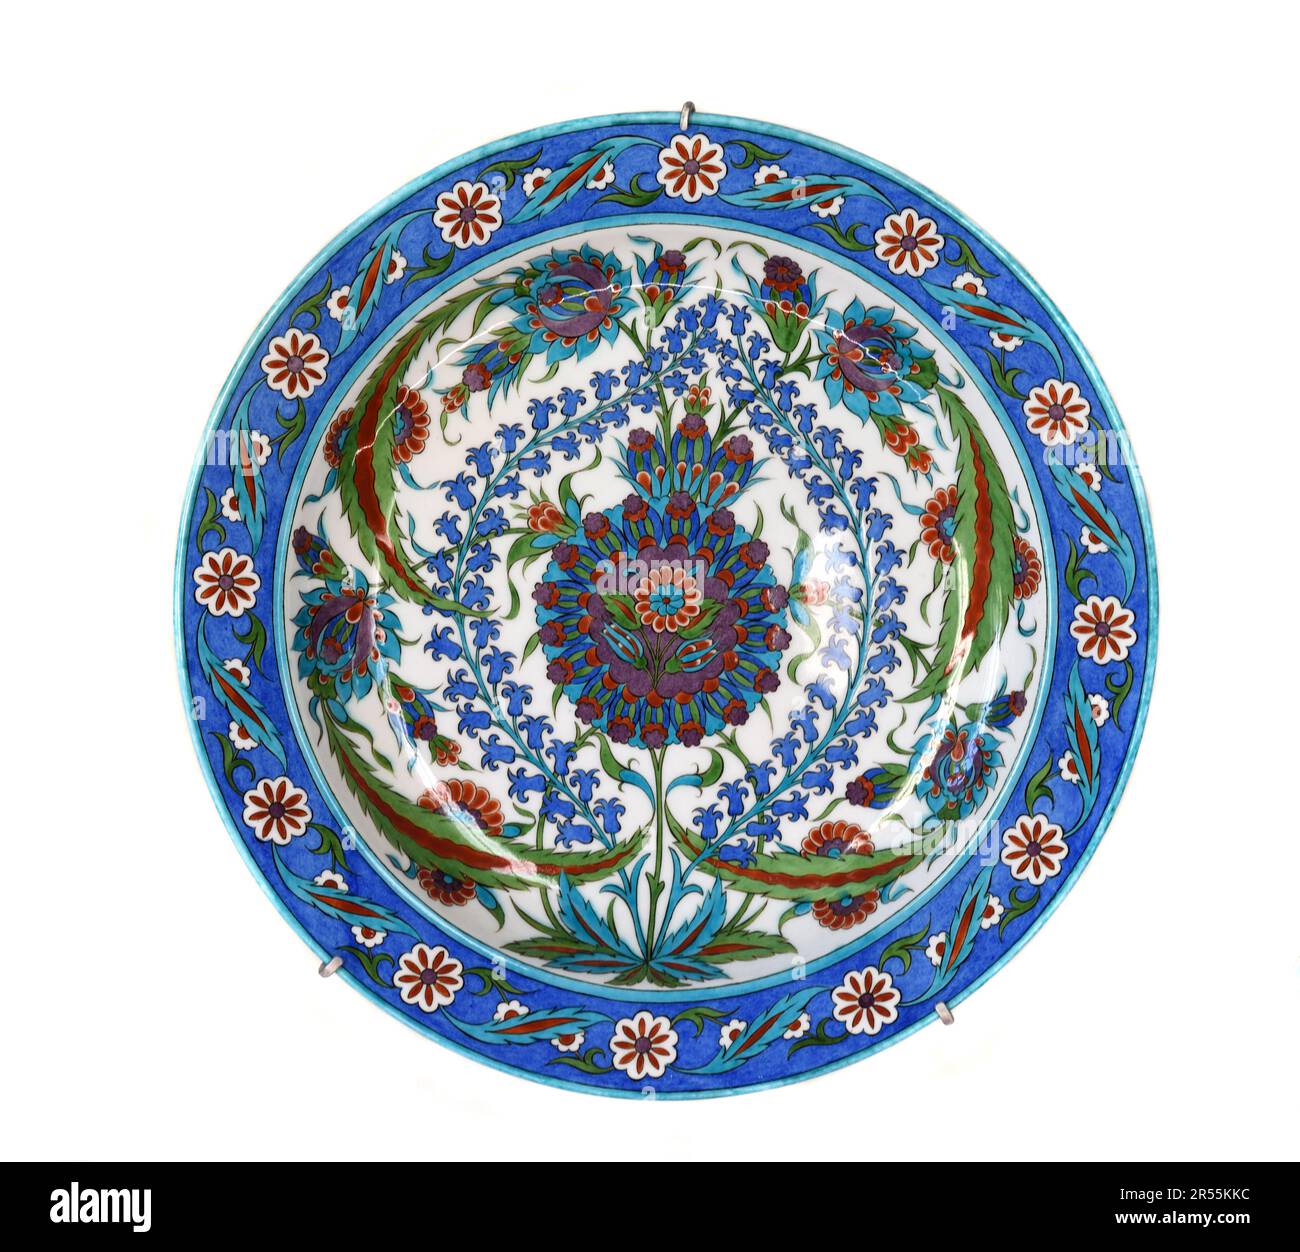 Iznik Plate with Floral Designs from Iznik Turkey c19th Stock Photo